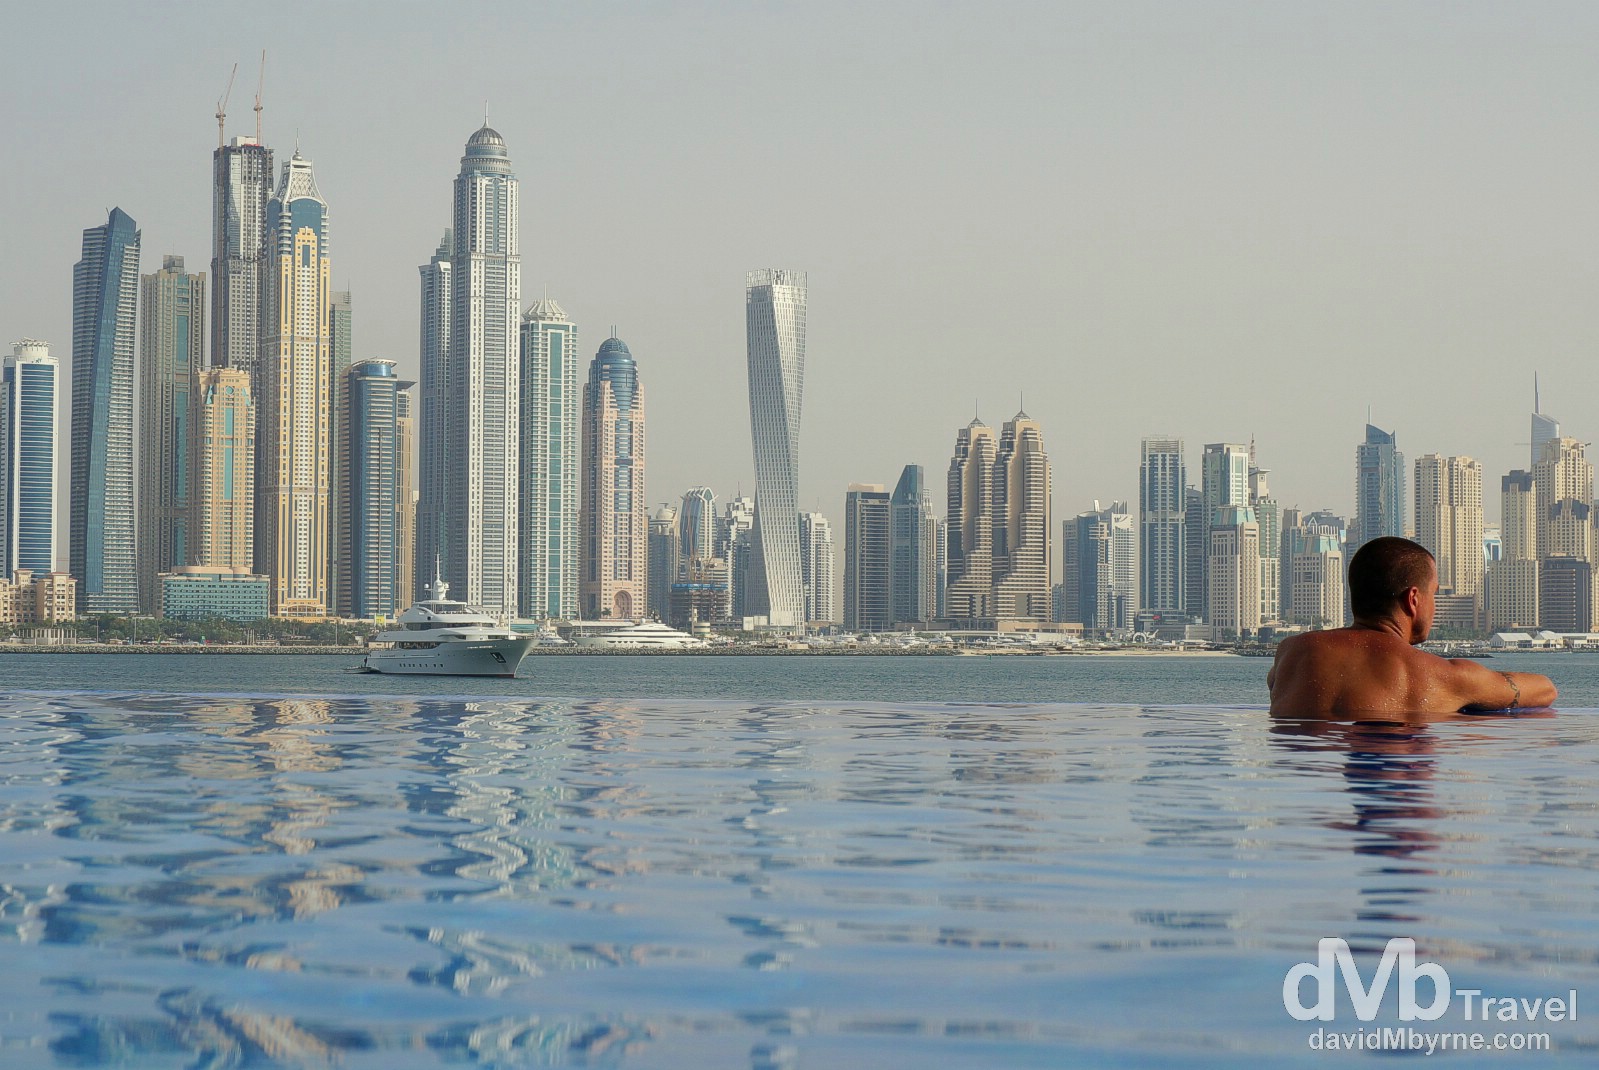 The towers of Dubai Marina as seen from the infinity pool of the Oceania Beach Club, Palm Jumeirah, Dubai, UAE. April 19th, 2014.